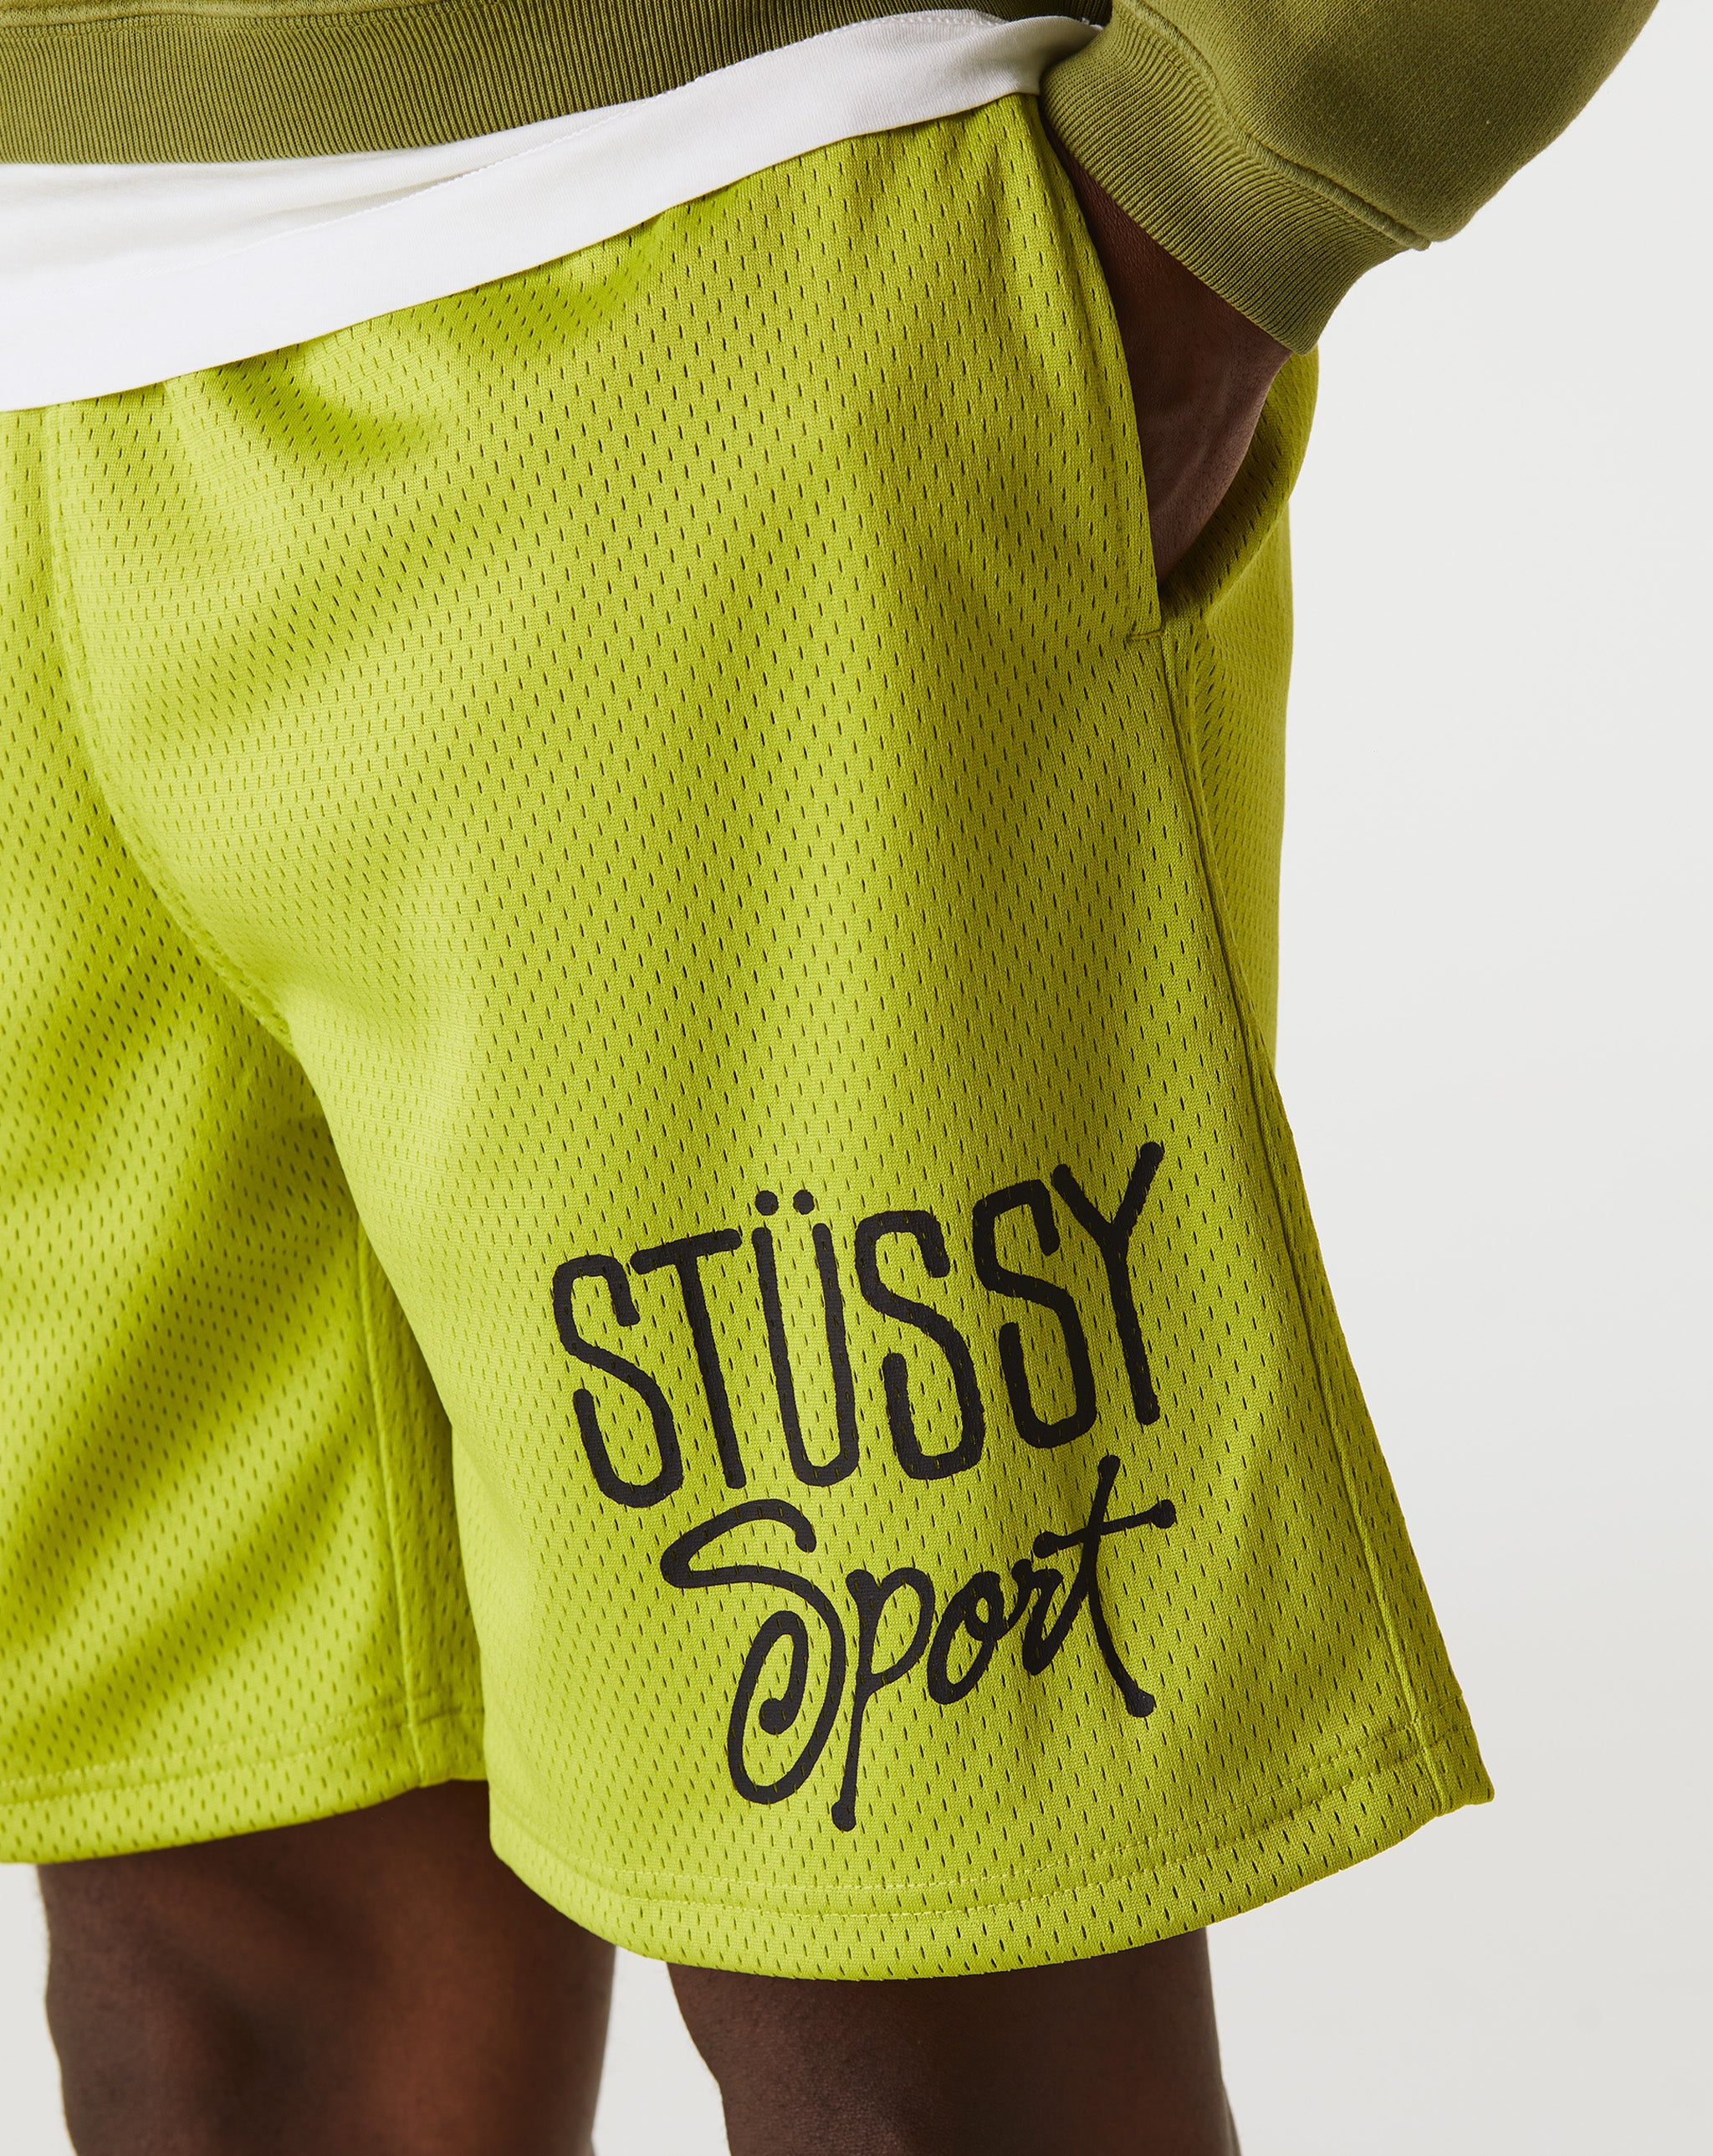 Stüssy Mesh Sport Shorts  - Cheap Cerbe Jordan outlet